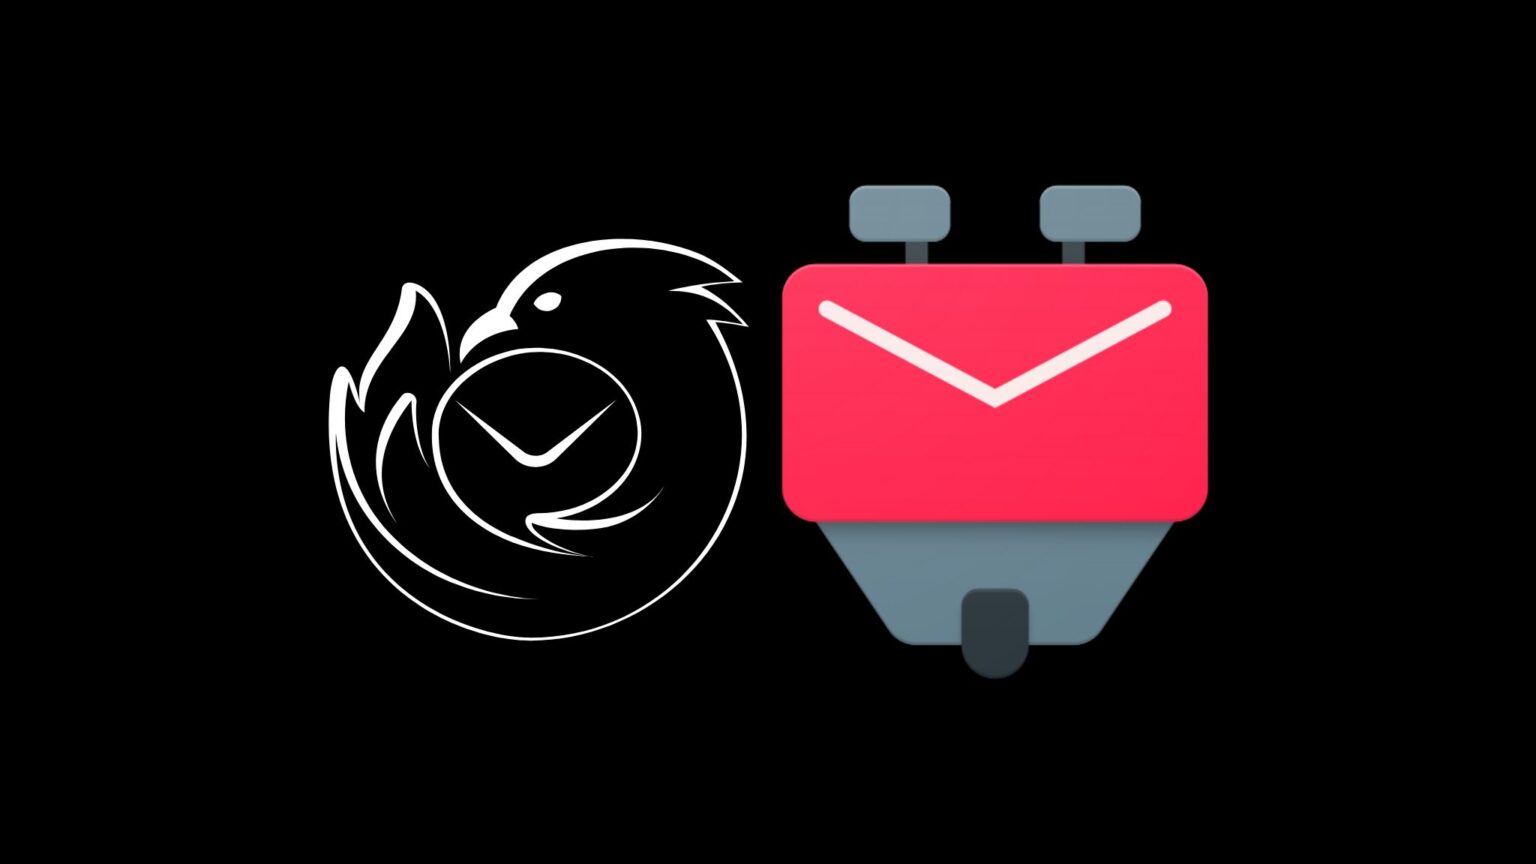 Monochrome Thunderbird "outline" logo next to the K-9 Mail for Android logo.